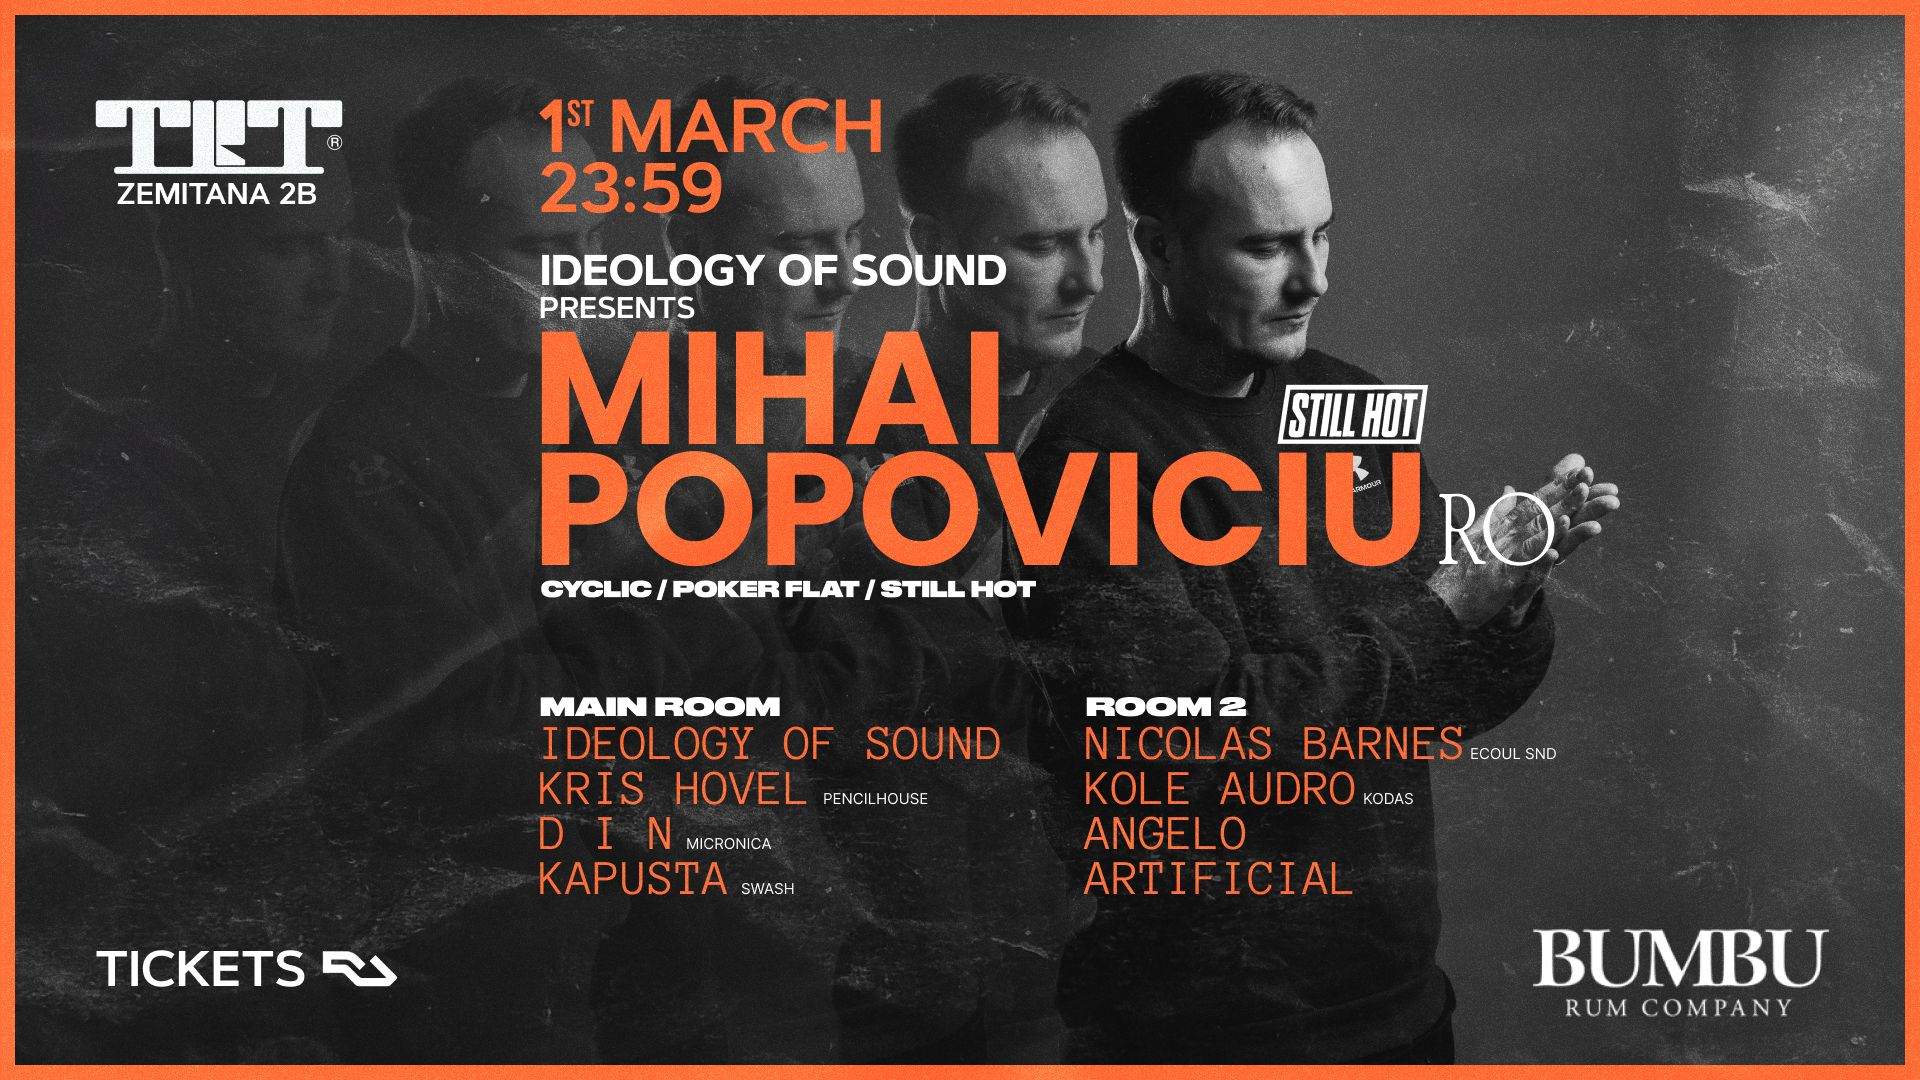 Ideology of Sound presents Mihai Popoviciu - フライヤー表